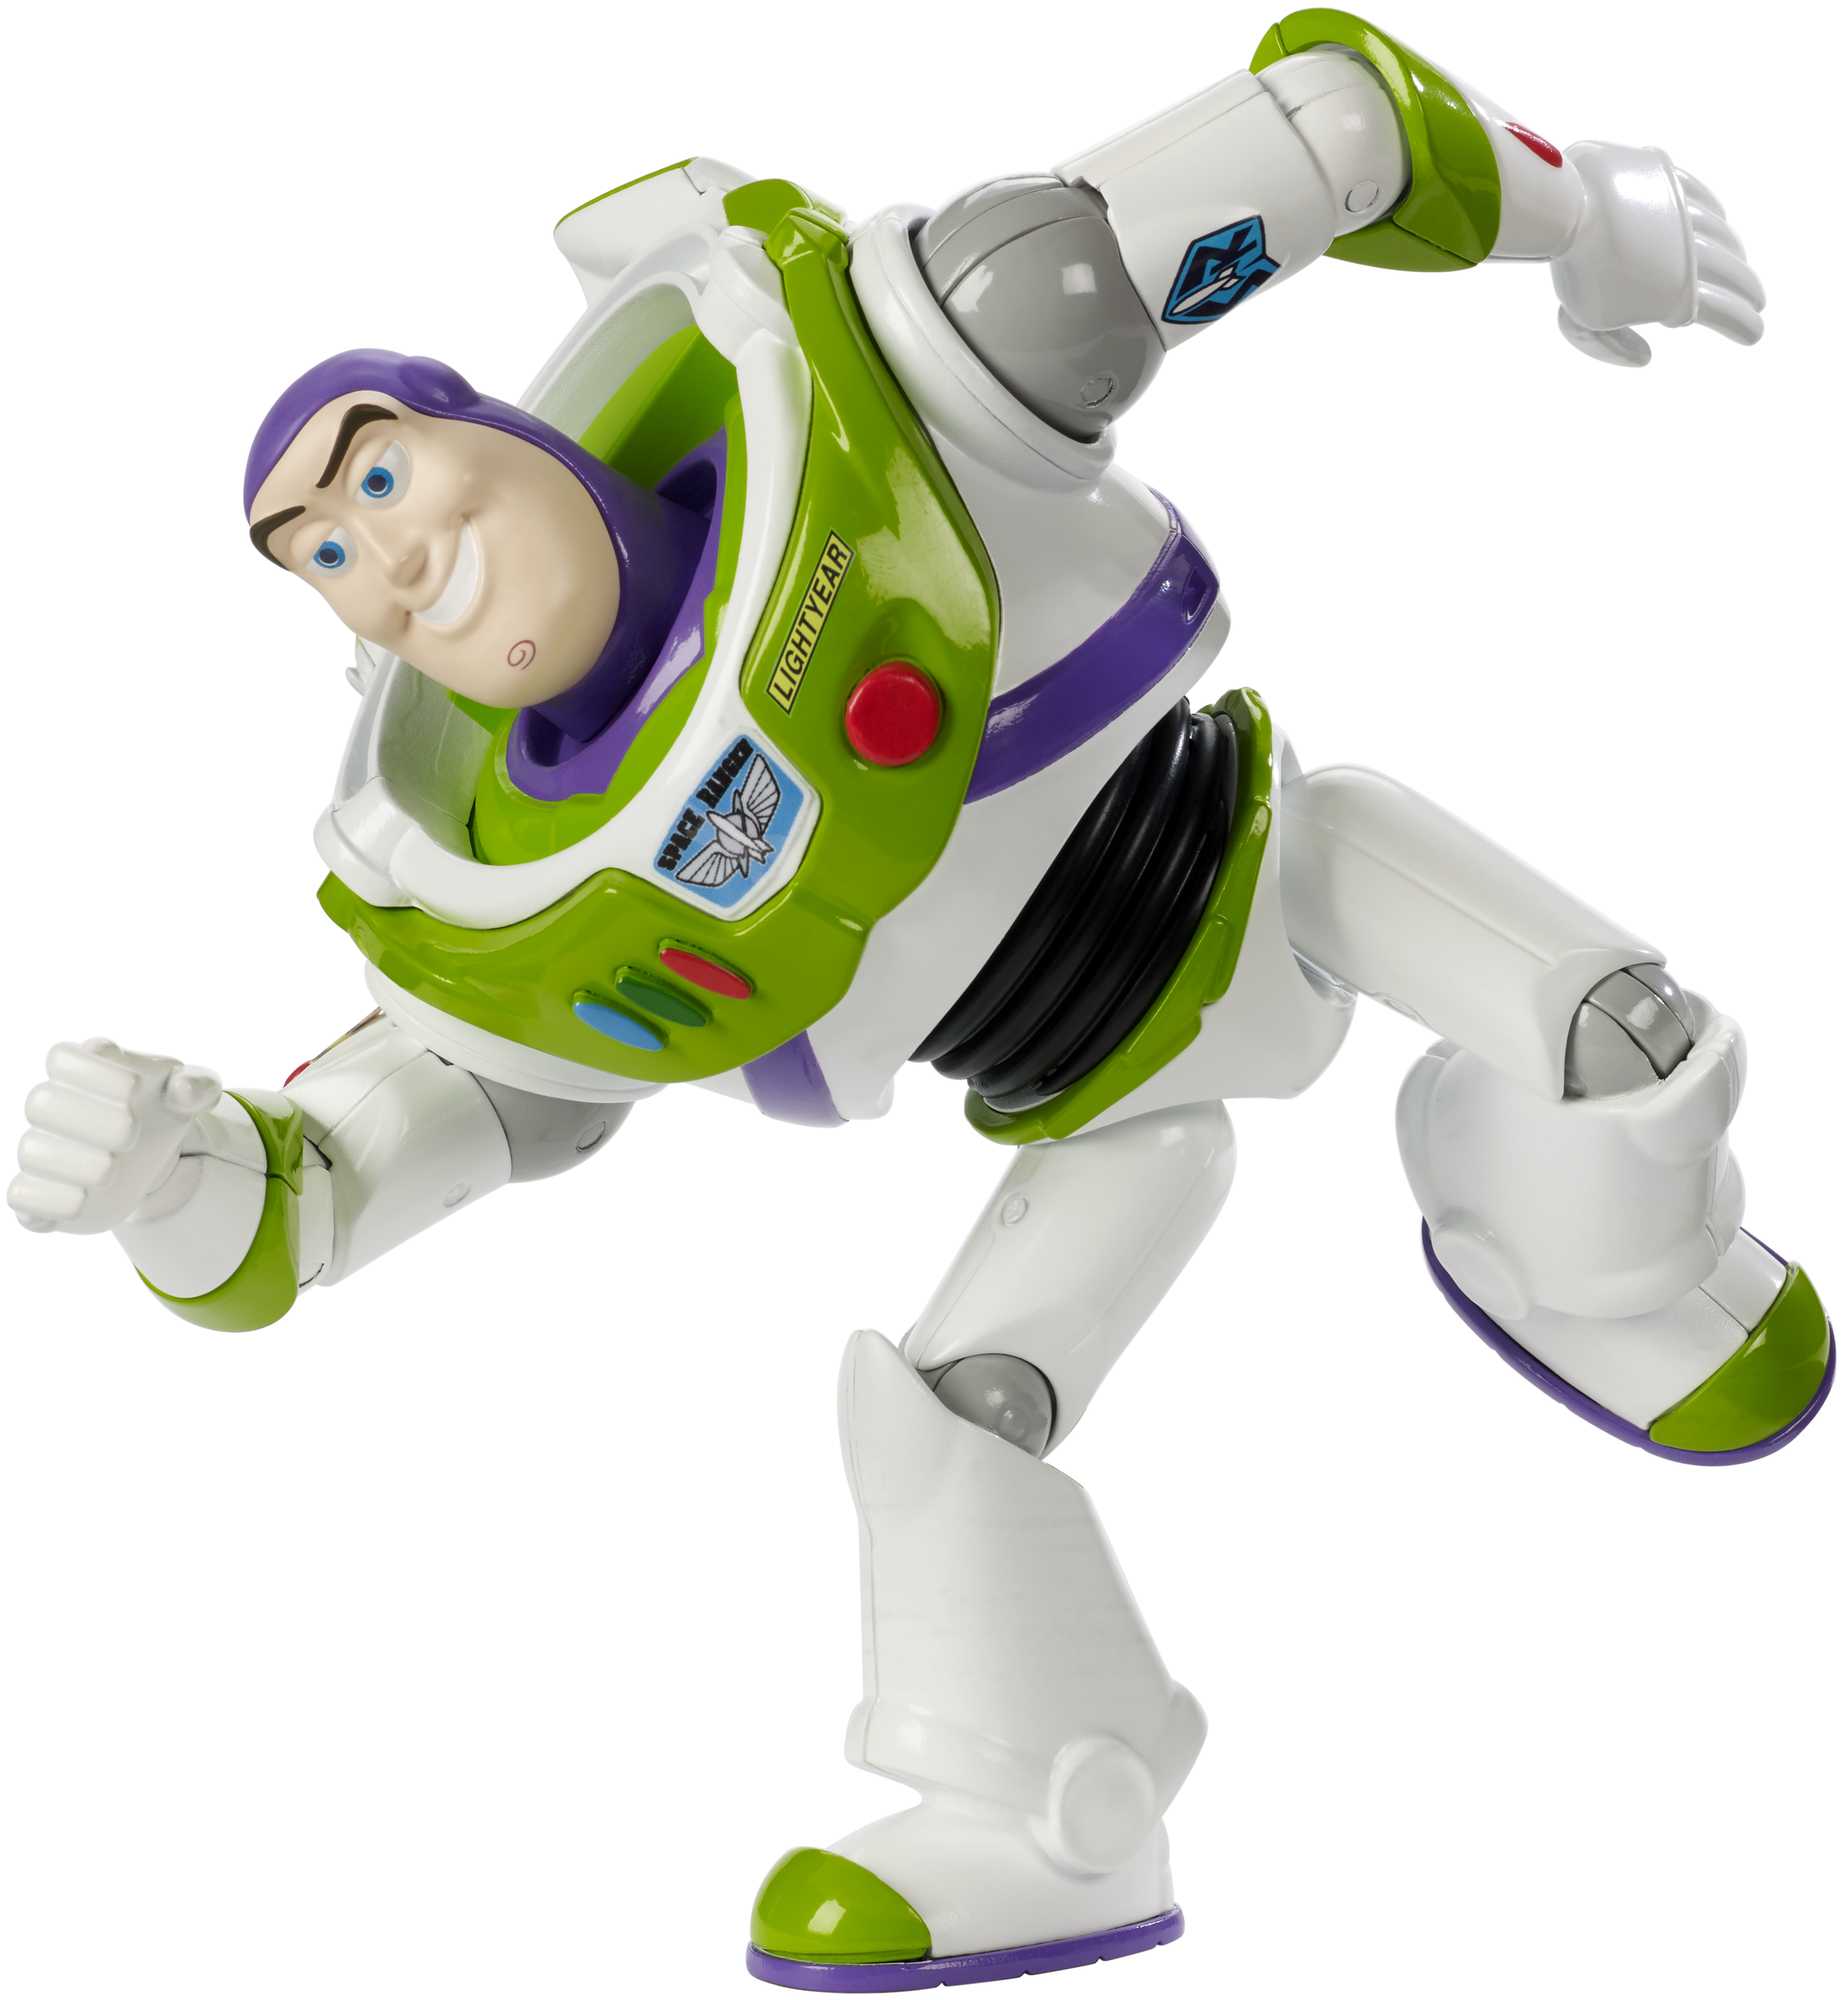 Disney Pixar Toy Story Buzz Lightyear Action Figure - image 4 of 6